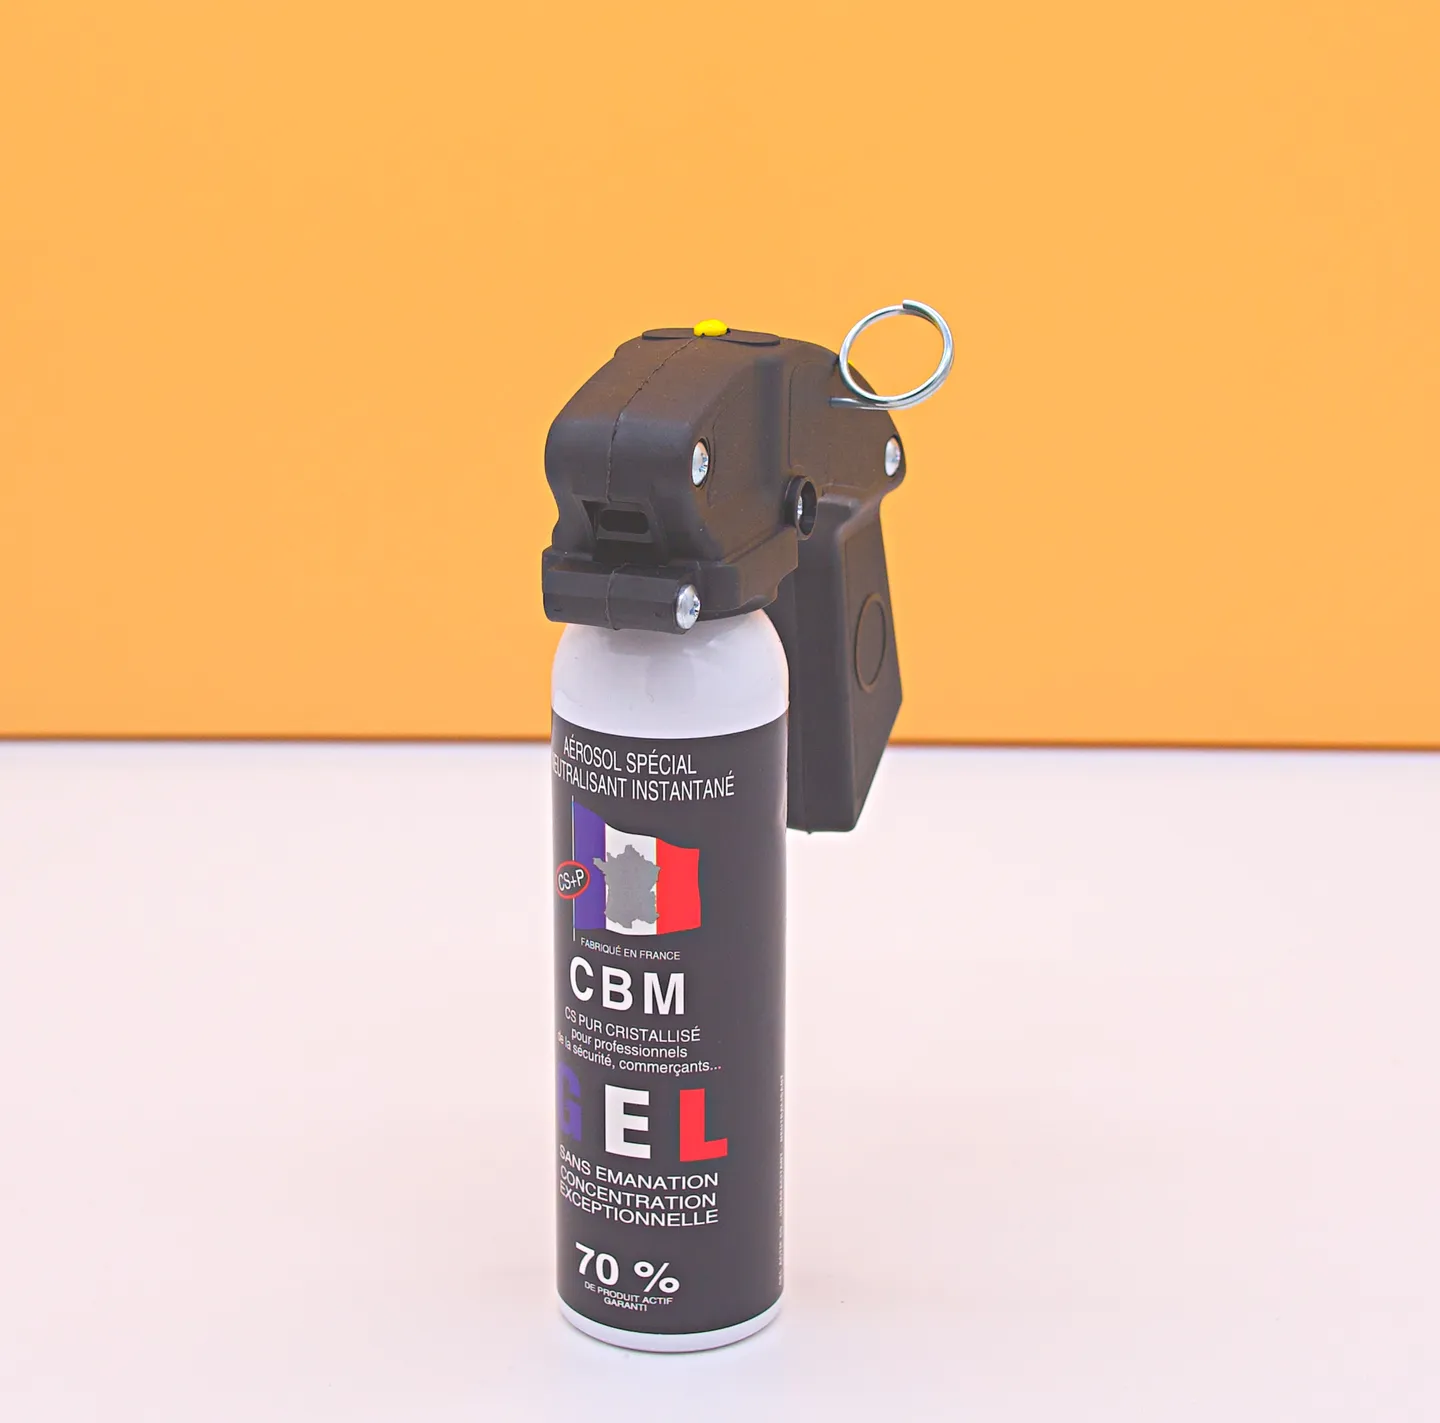 Spray Lacrimogeno - Bombo lacrimogeno GEL CS 100ml CBM – Grande capacità – Portata 5 a 7 metri